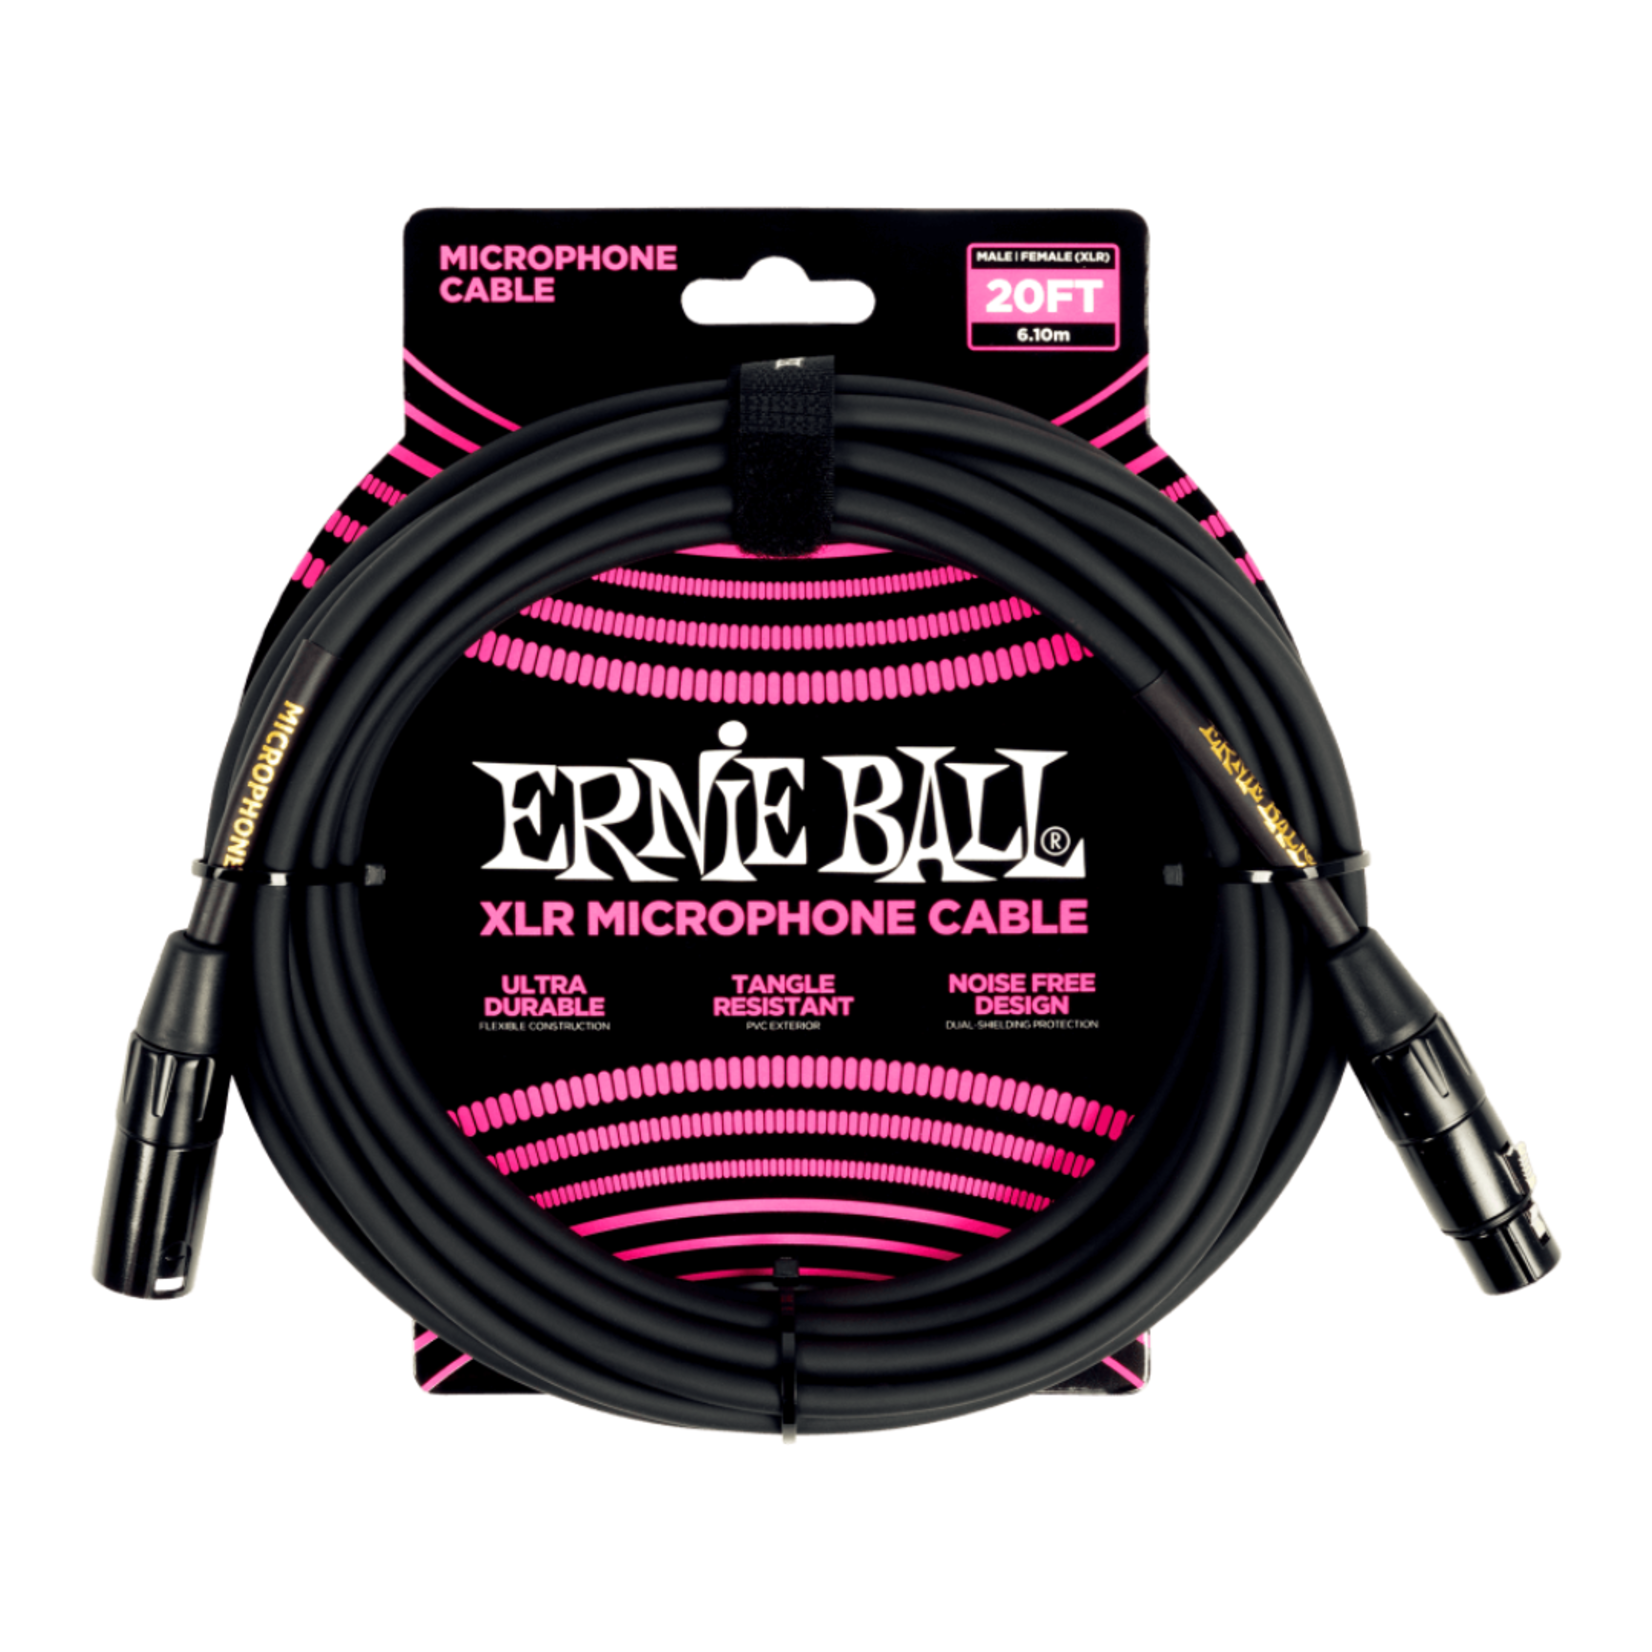 Ernie Ball Classic XLR Microphone Cable Male/Female 20ft - Black